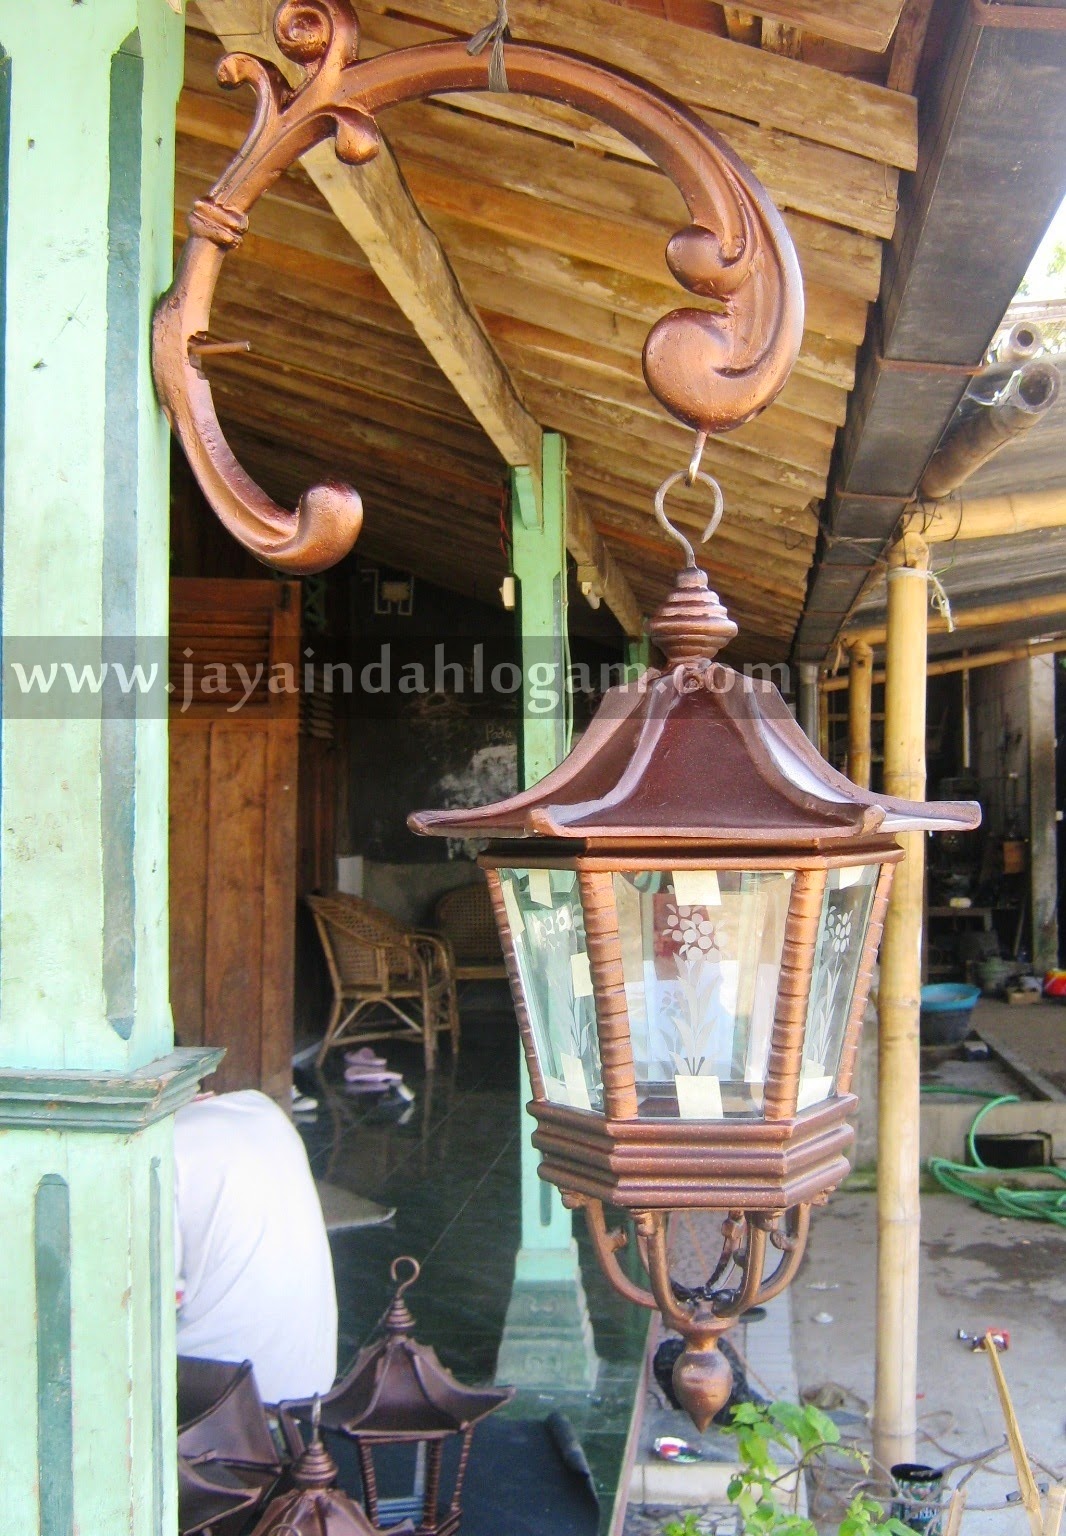 http://www.jayaindahlogam.com/2014/08/kerajinan-lampu-dinding.html